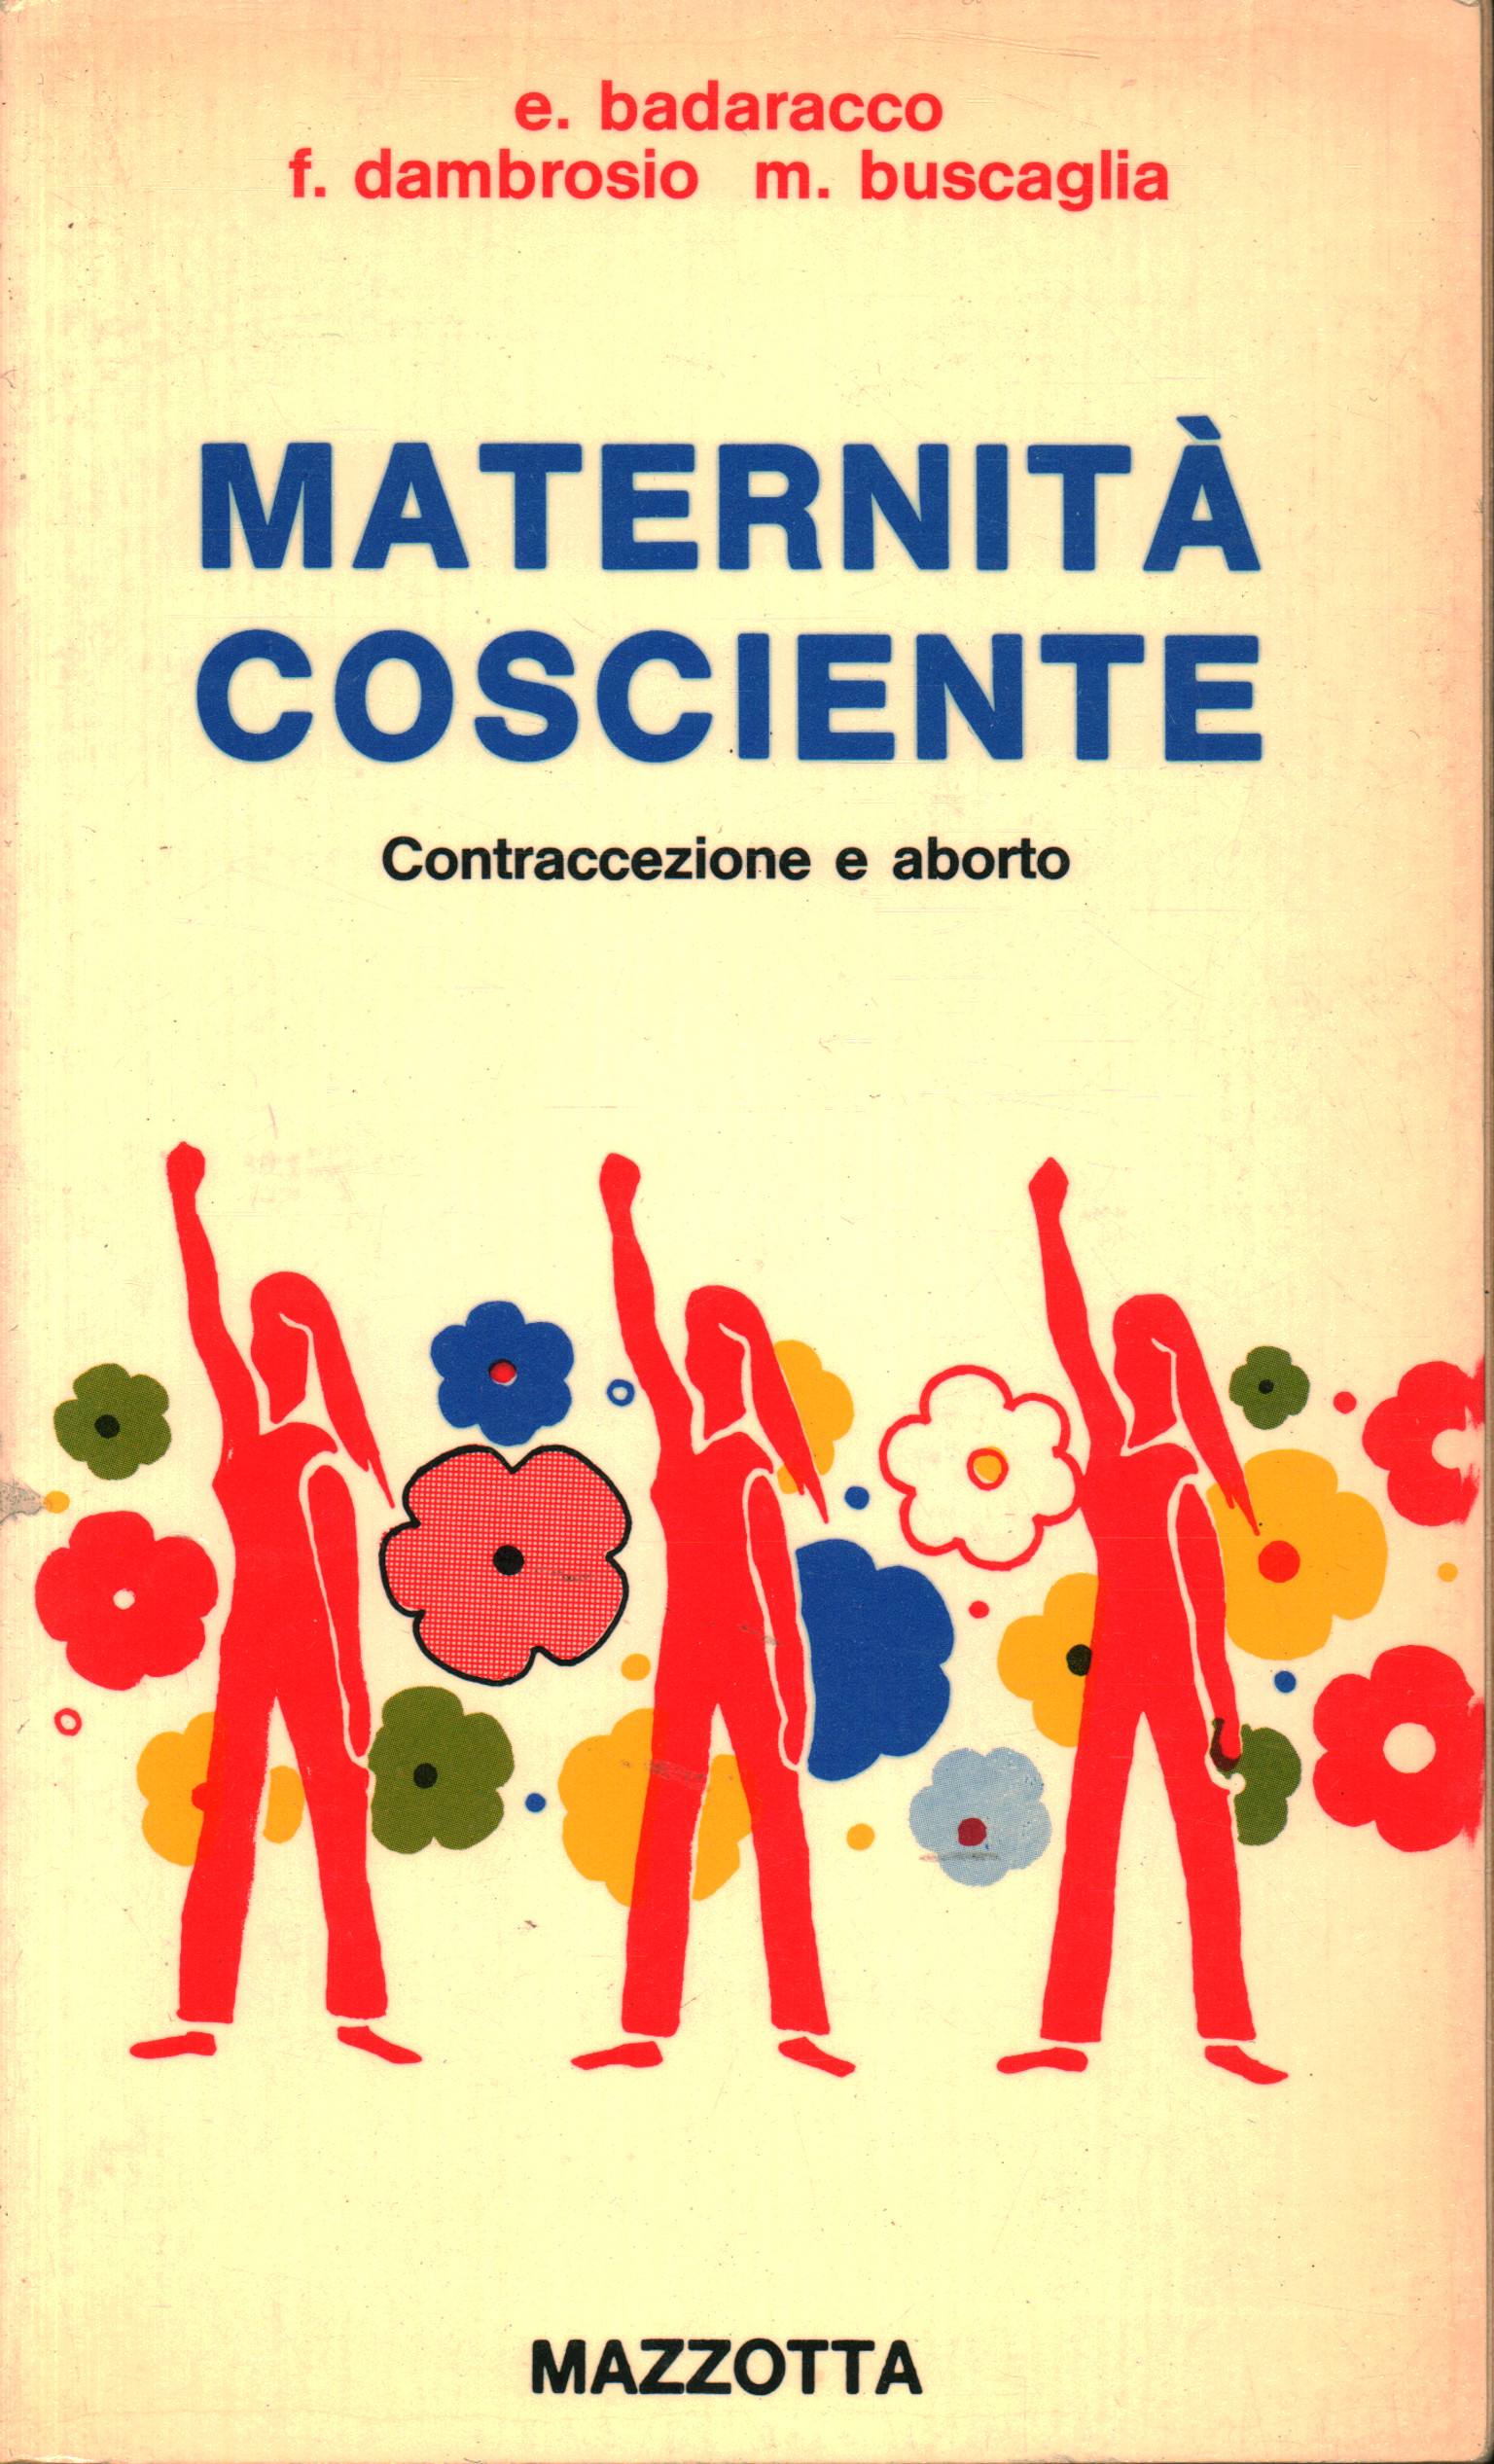 Conscious motherhood, Francesca Dambrosio Elvira Baldracco and Mauro Buscaglia